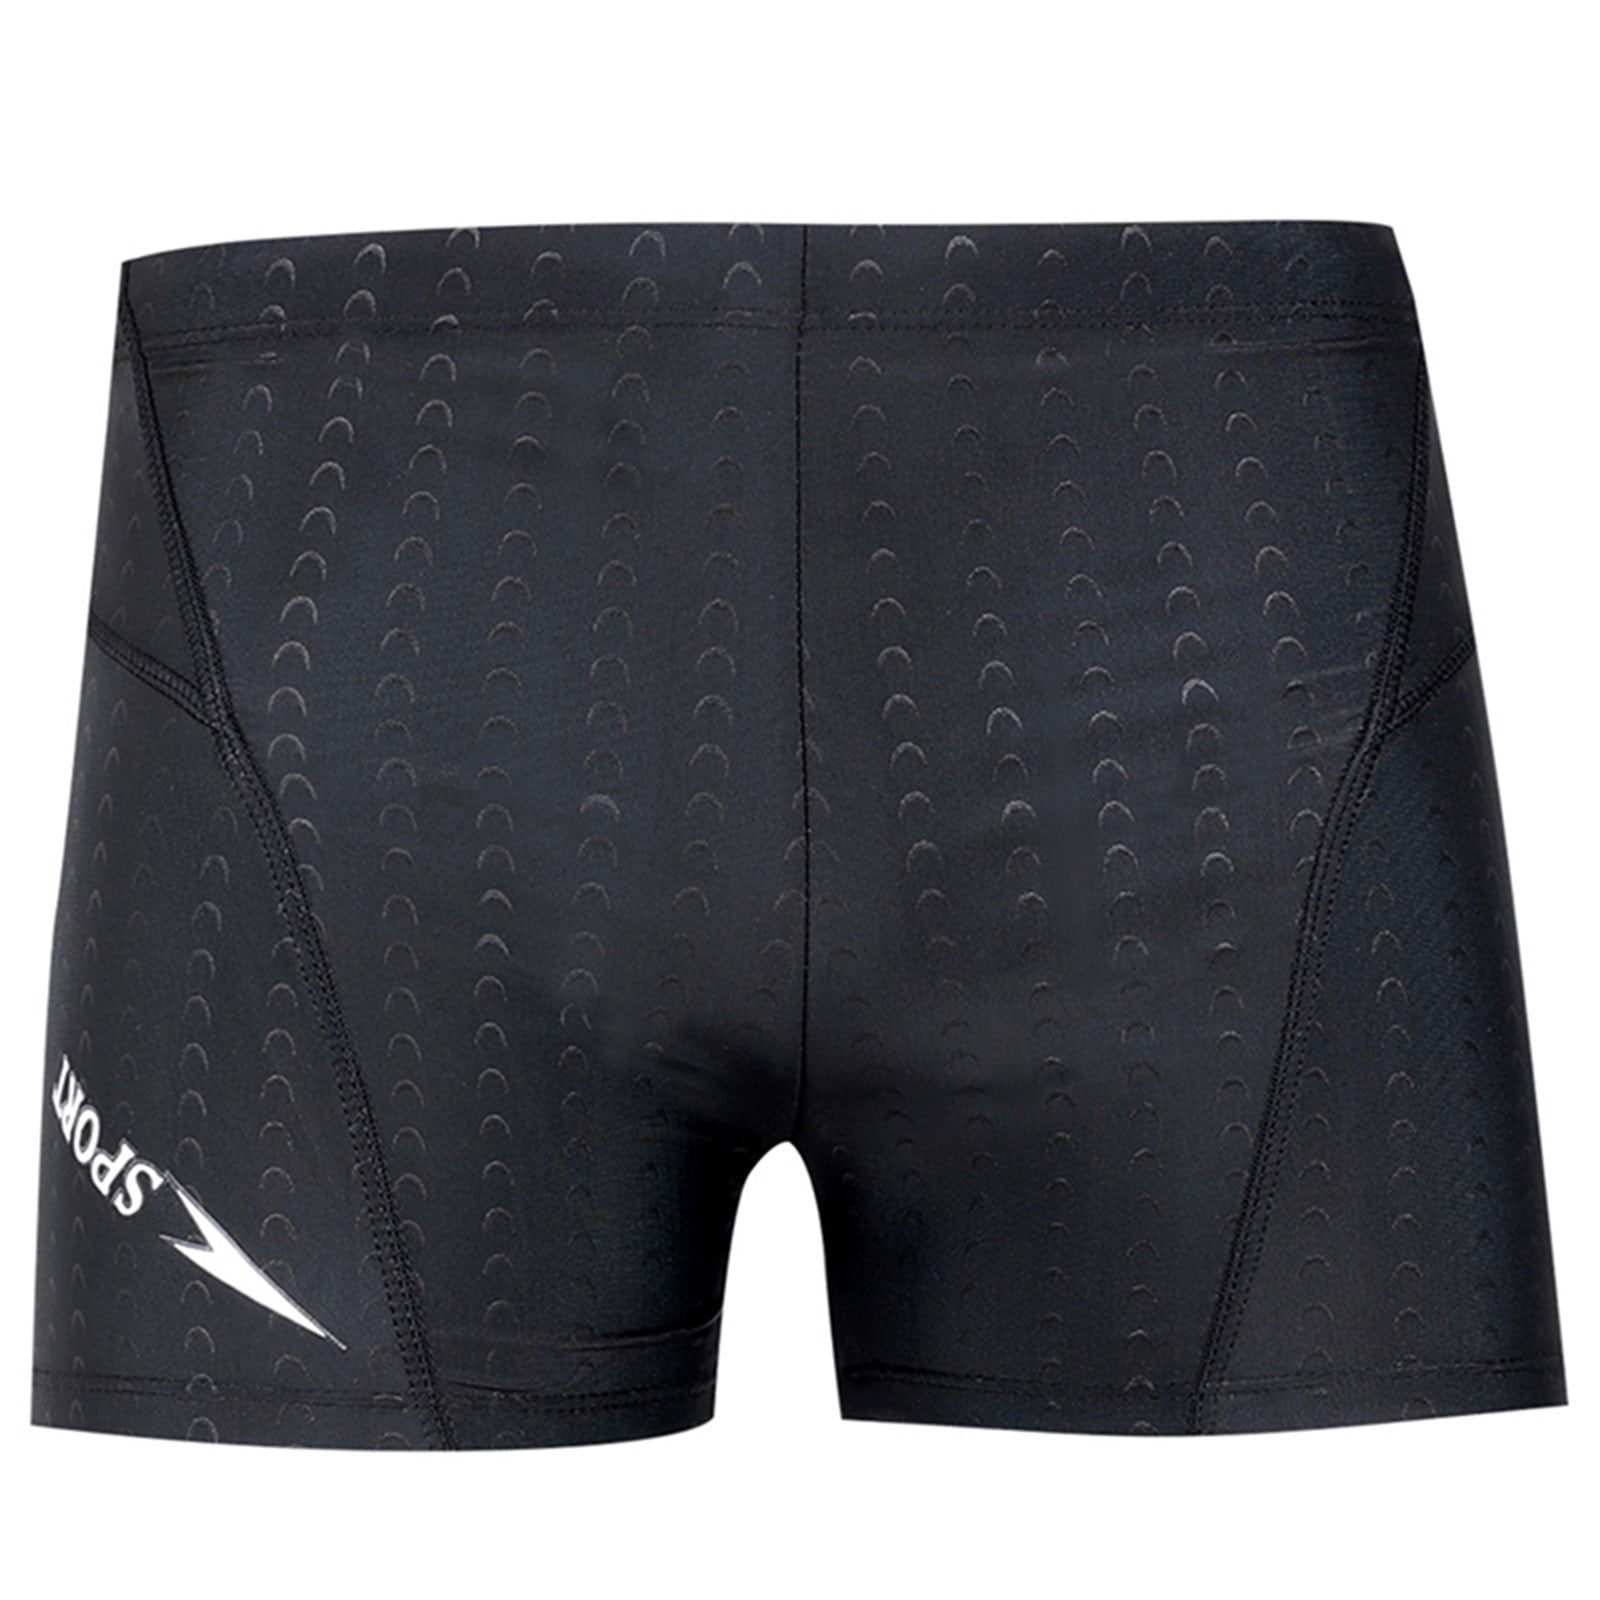 LWZWM Men's Beach Shorts Summer Swim Trunks Quick Dry Board Shorts ...